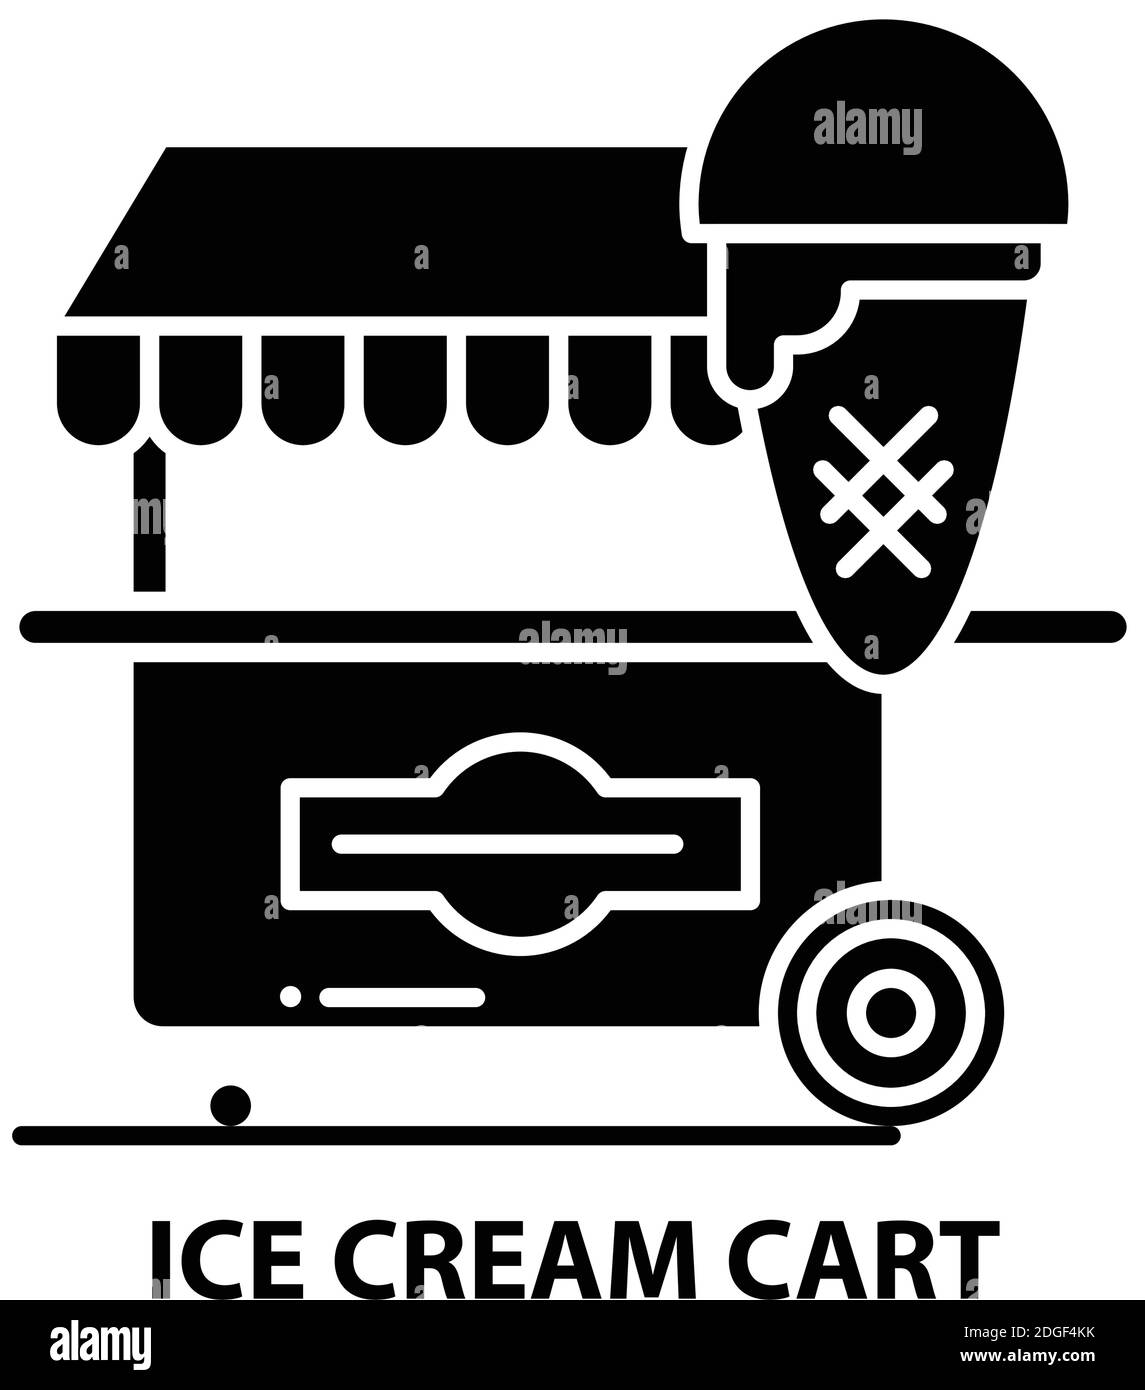 ice cream cart icon, black vector sign with editable strokes, concept illustration Stock Vector